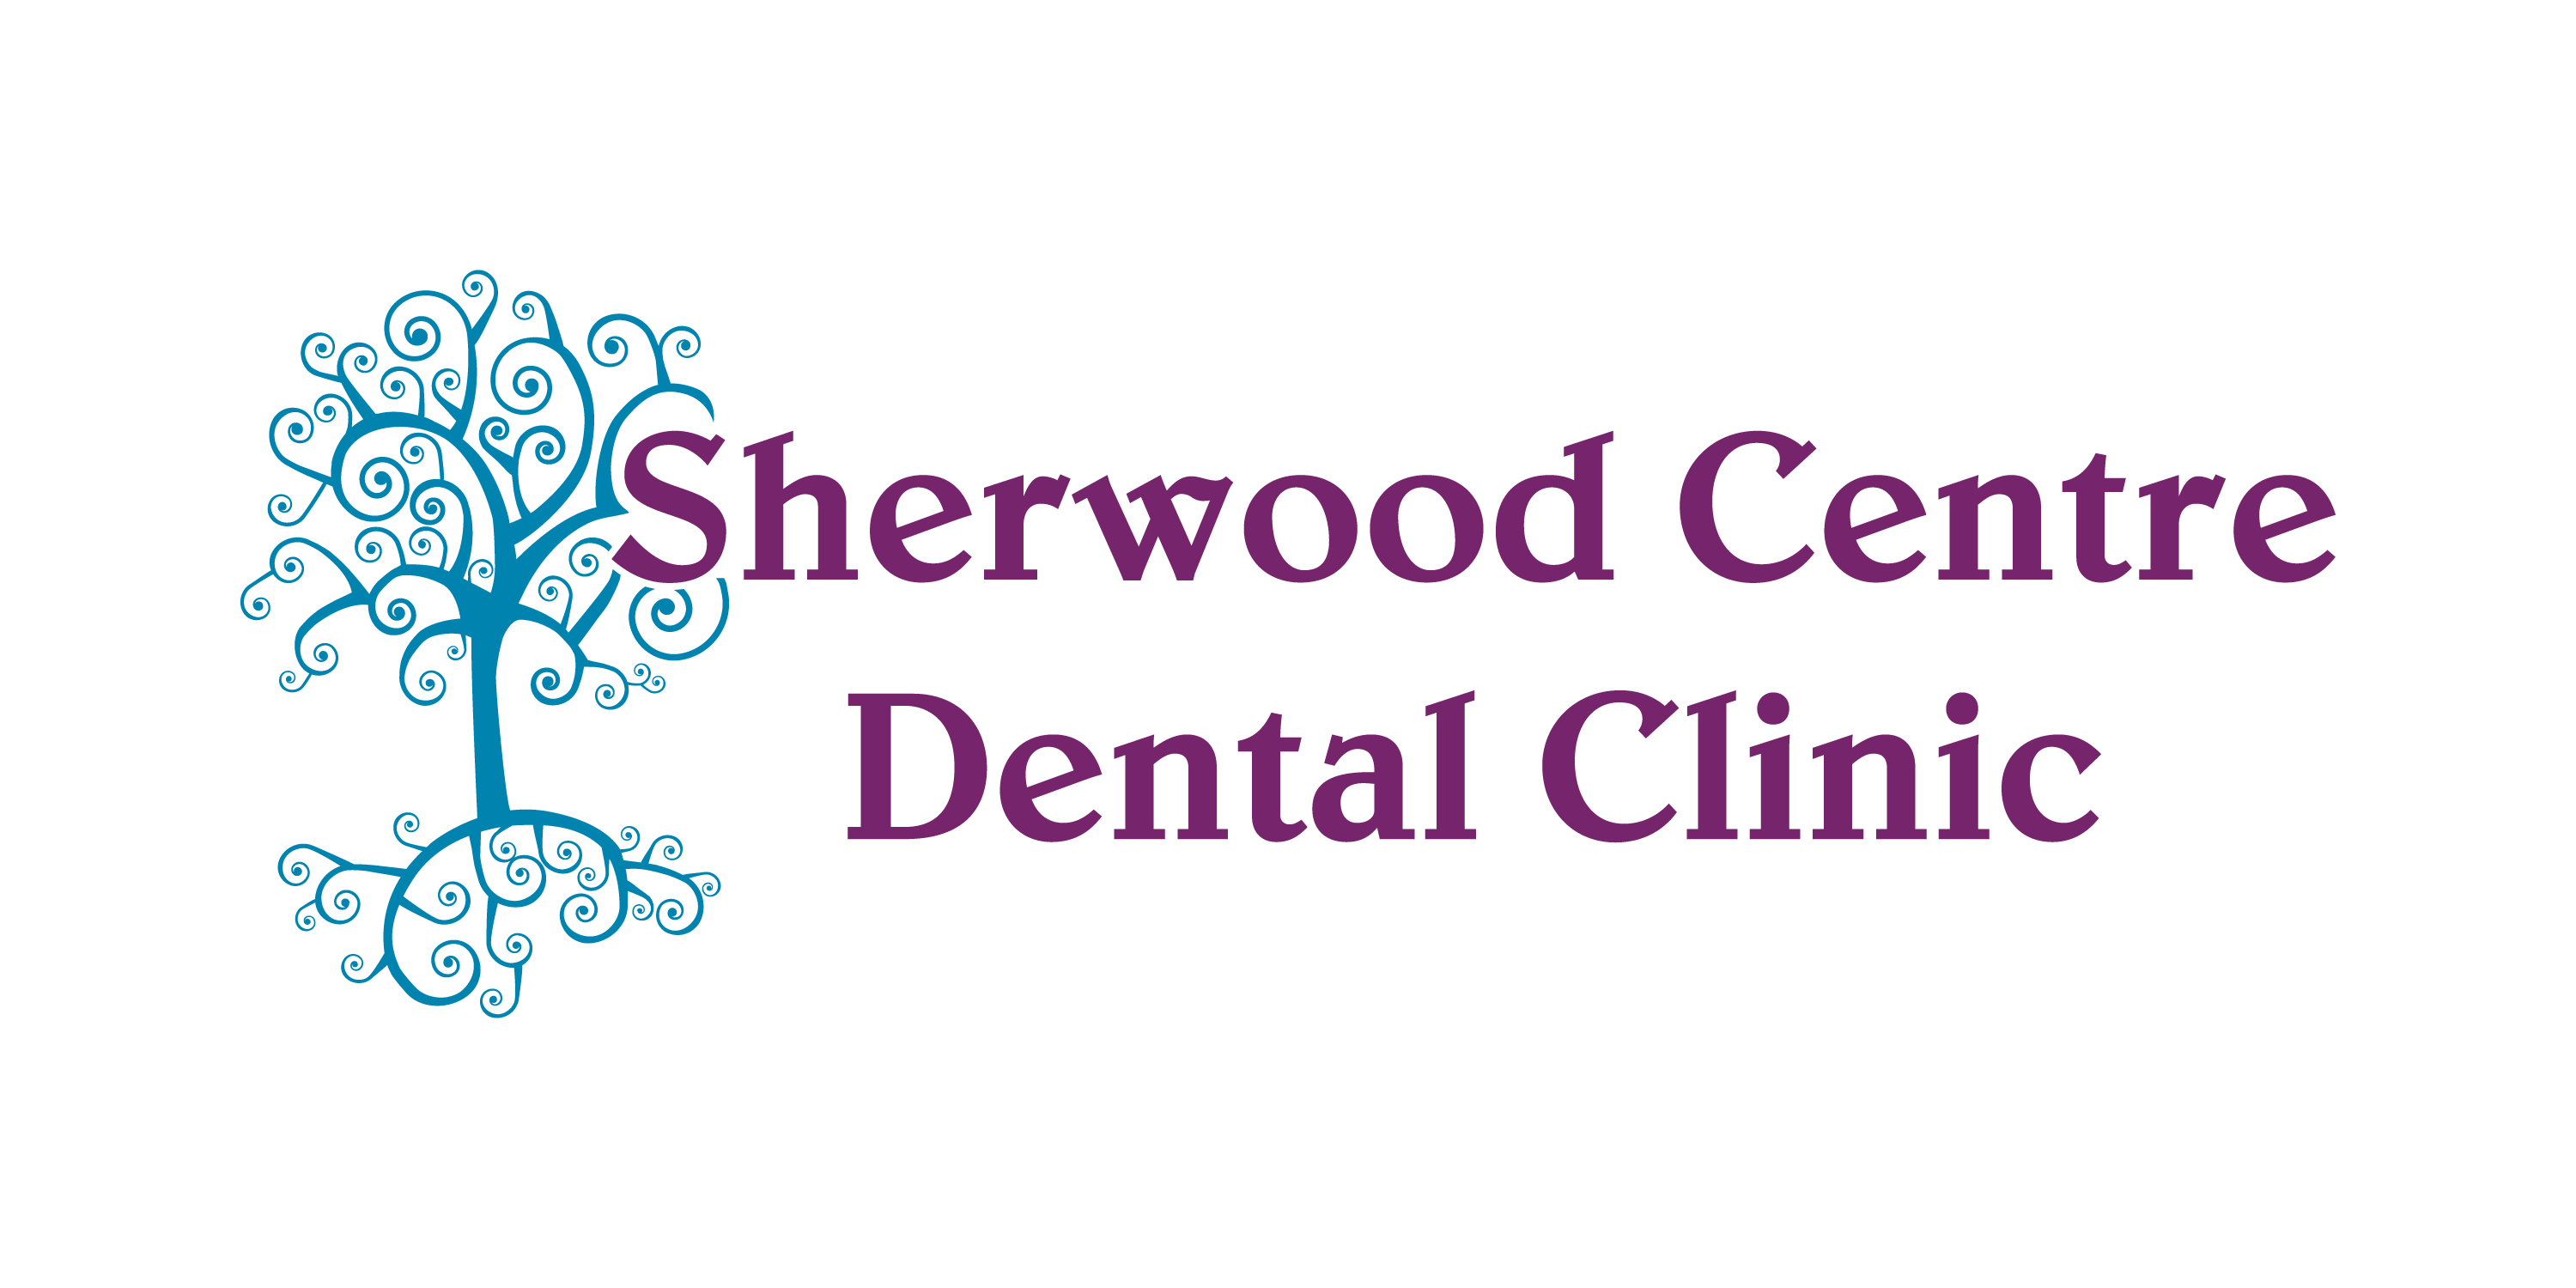 Sherwood Centre Dental Clinic Home